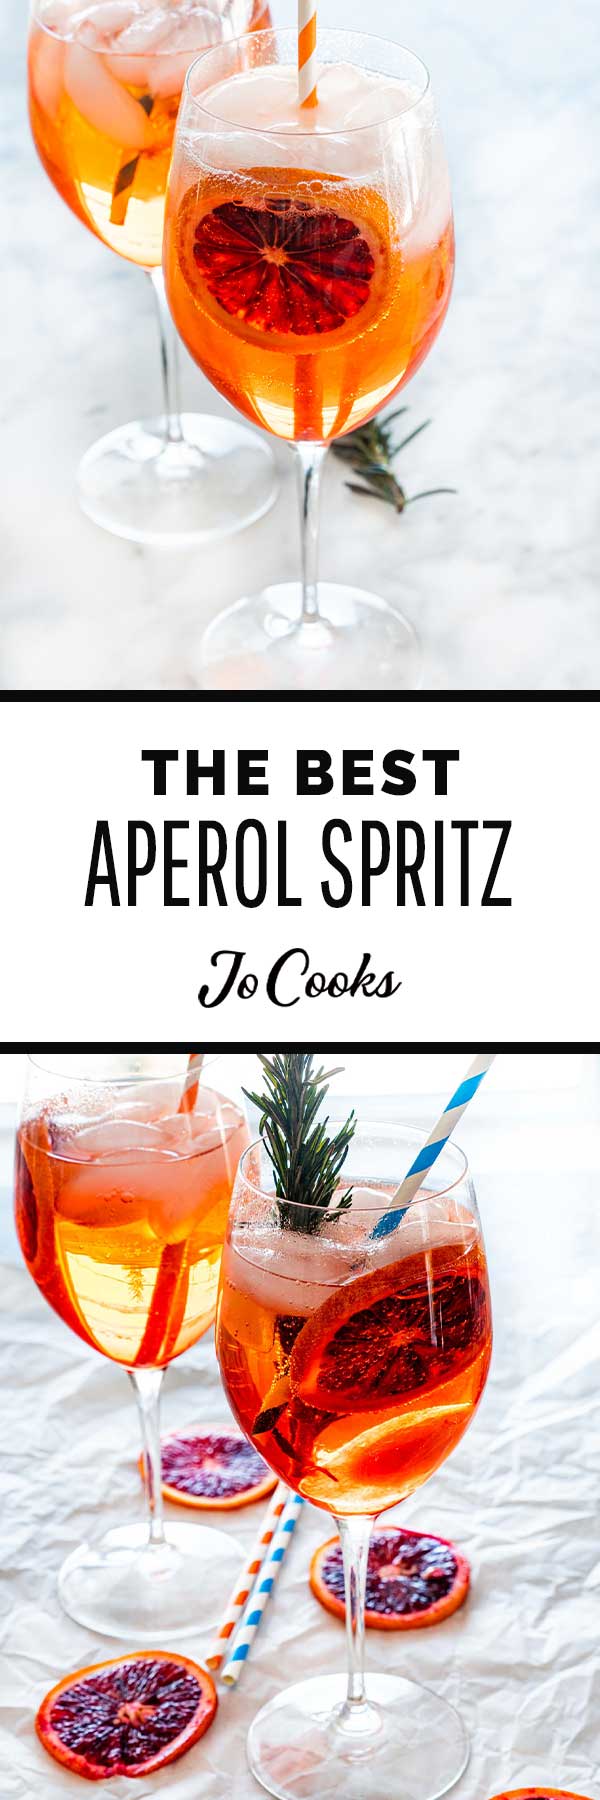 Aperol Spritz - Jo Cooks